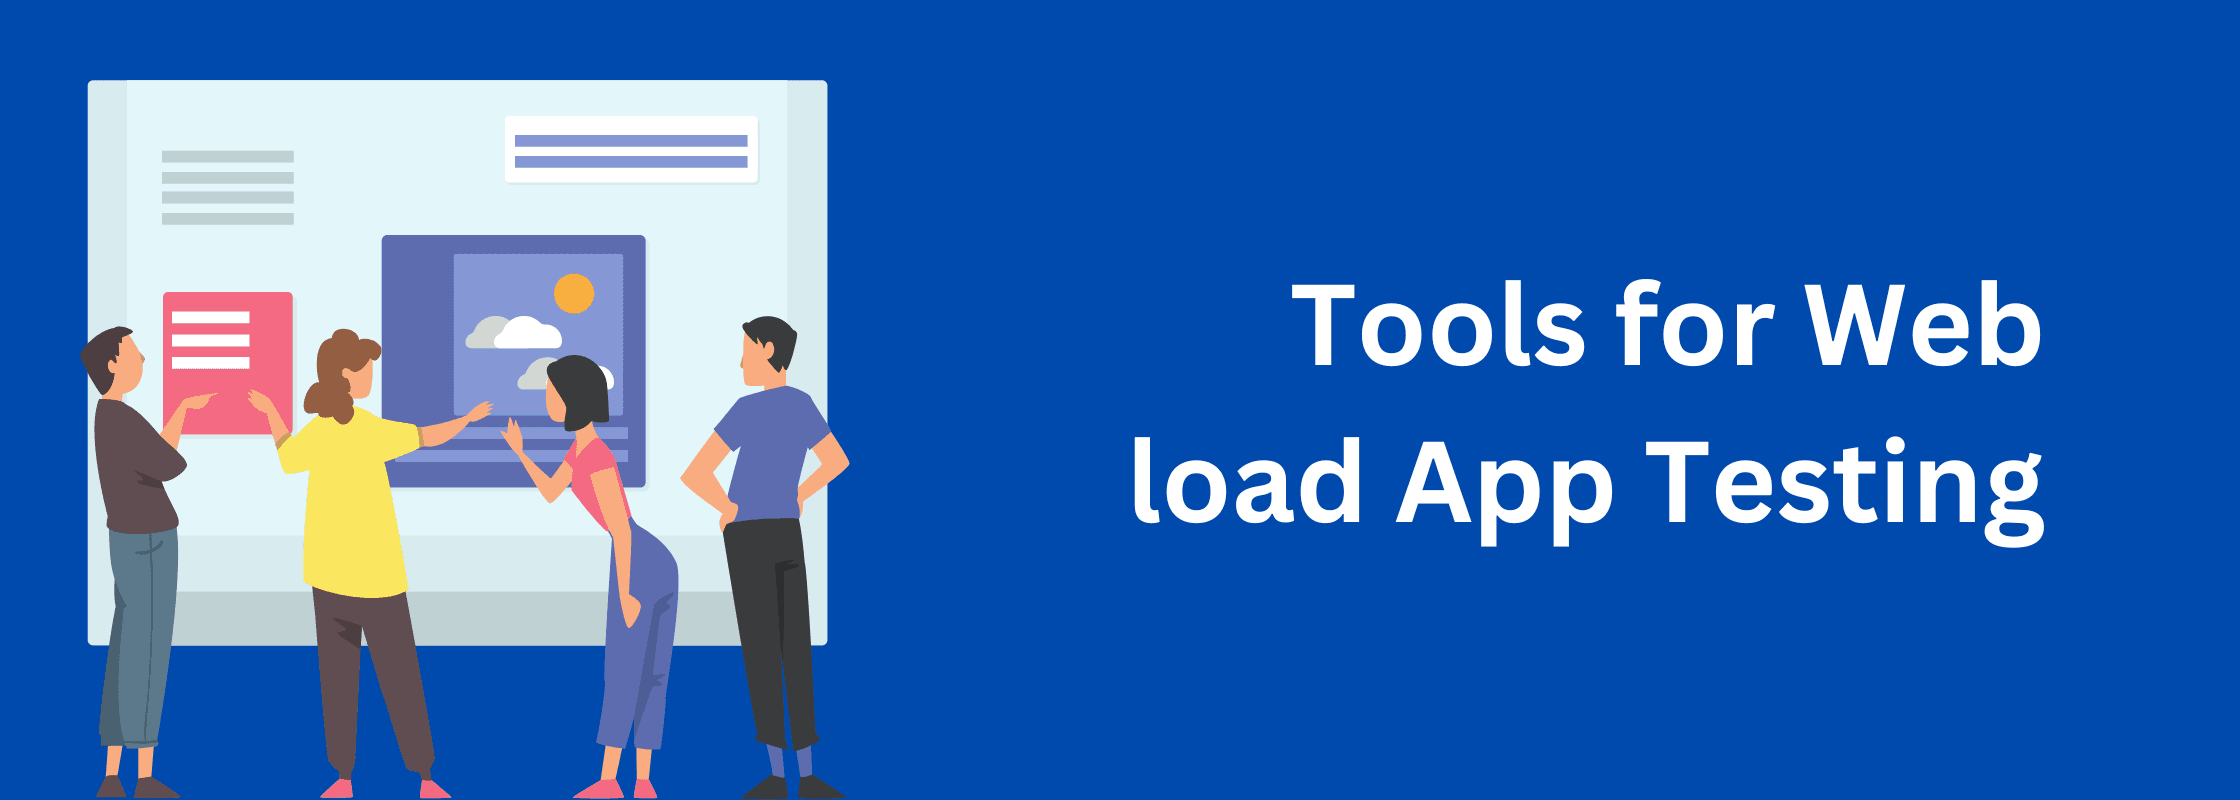 Web App load Testing